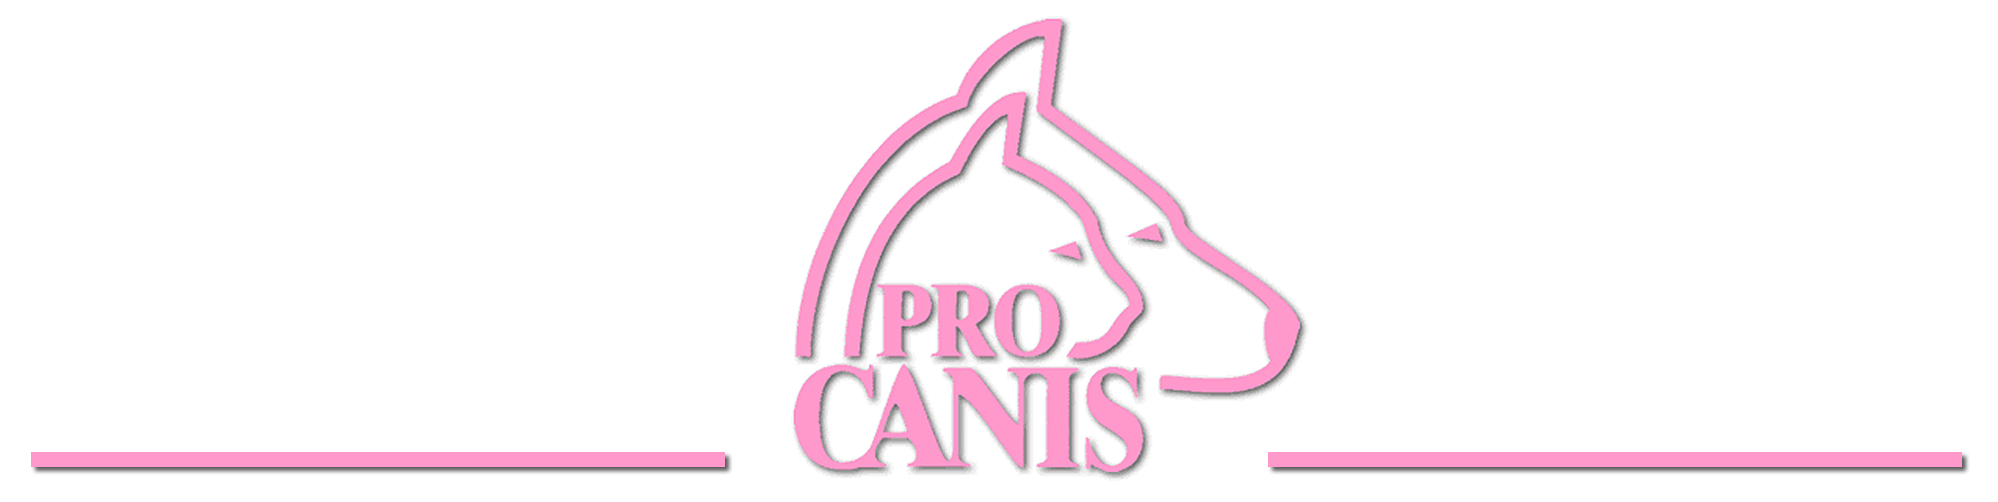 PRO CANIS Hunde- / Katzensalon